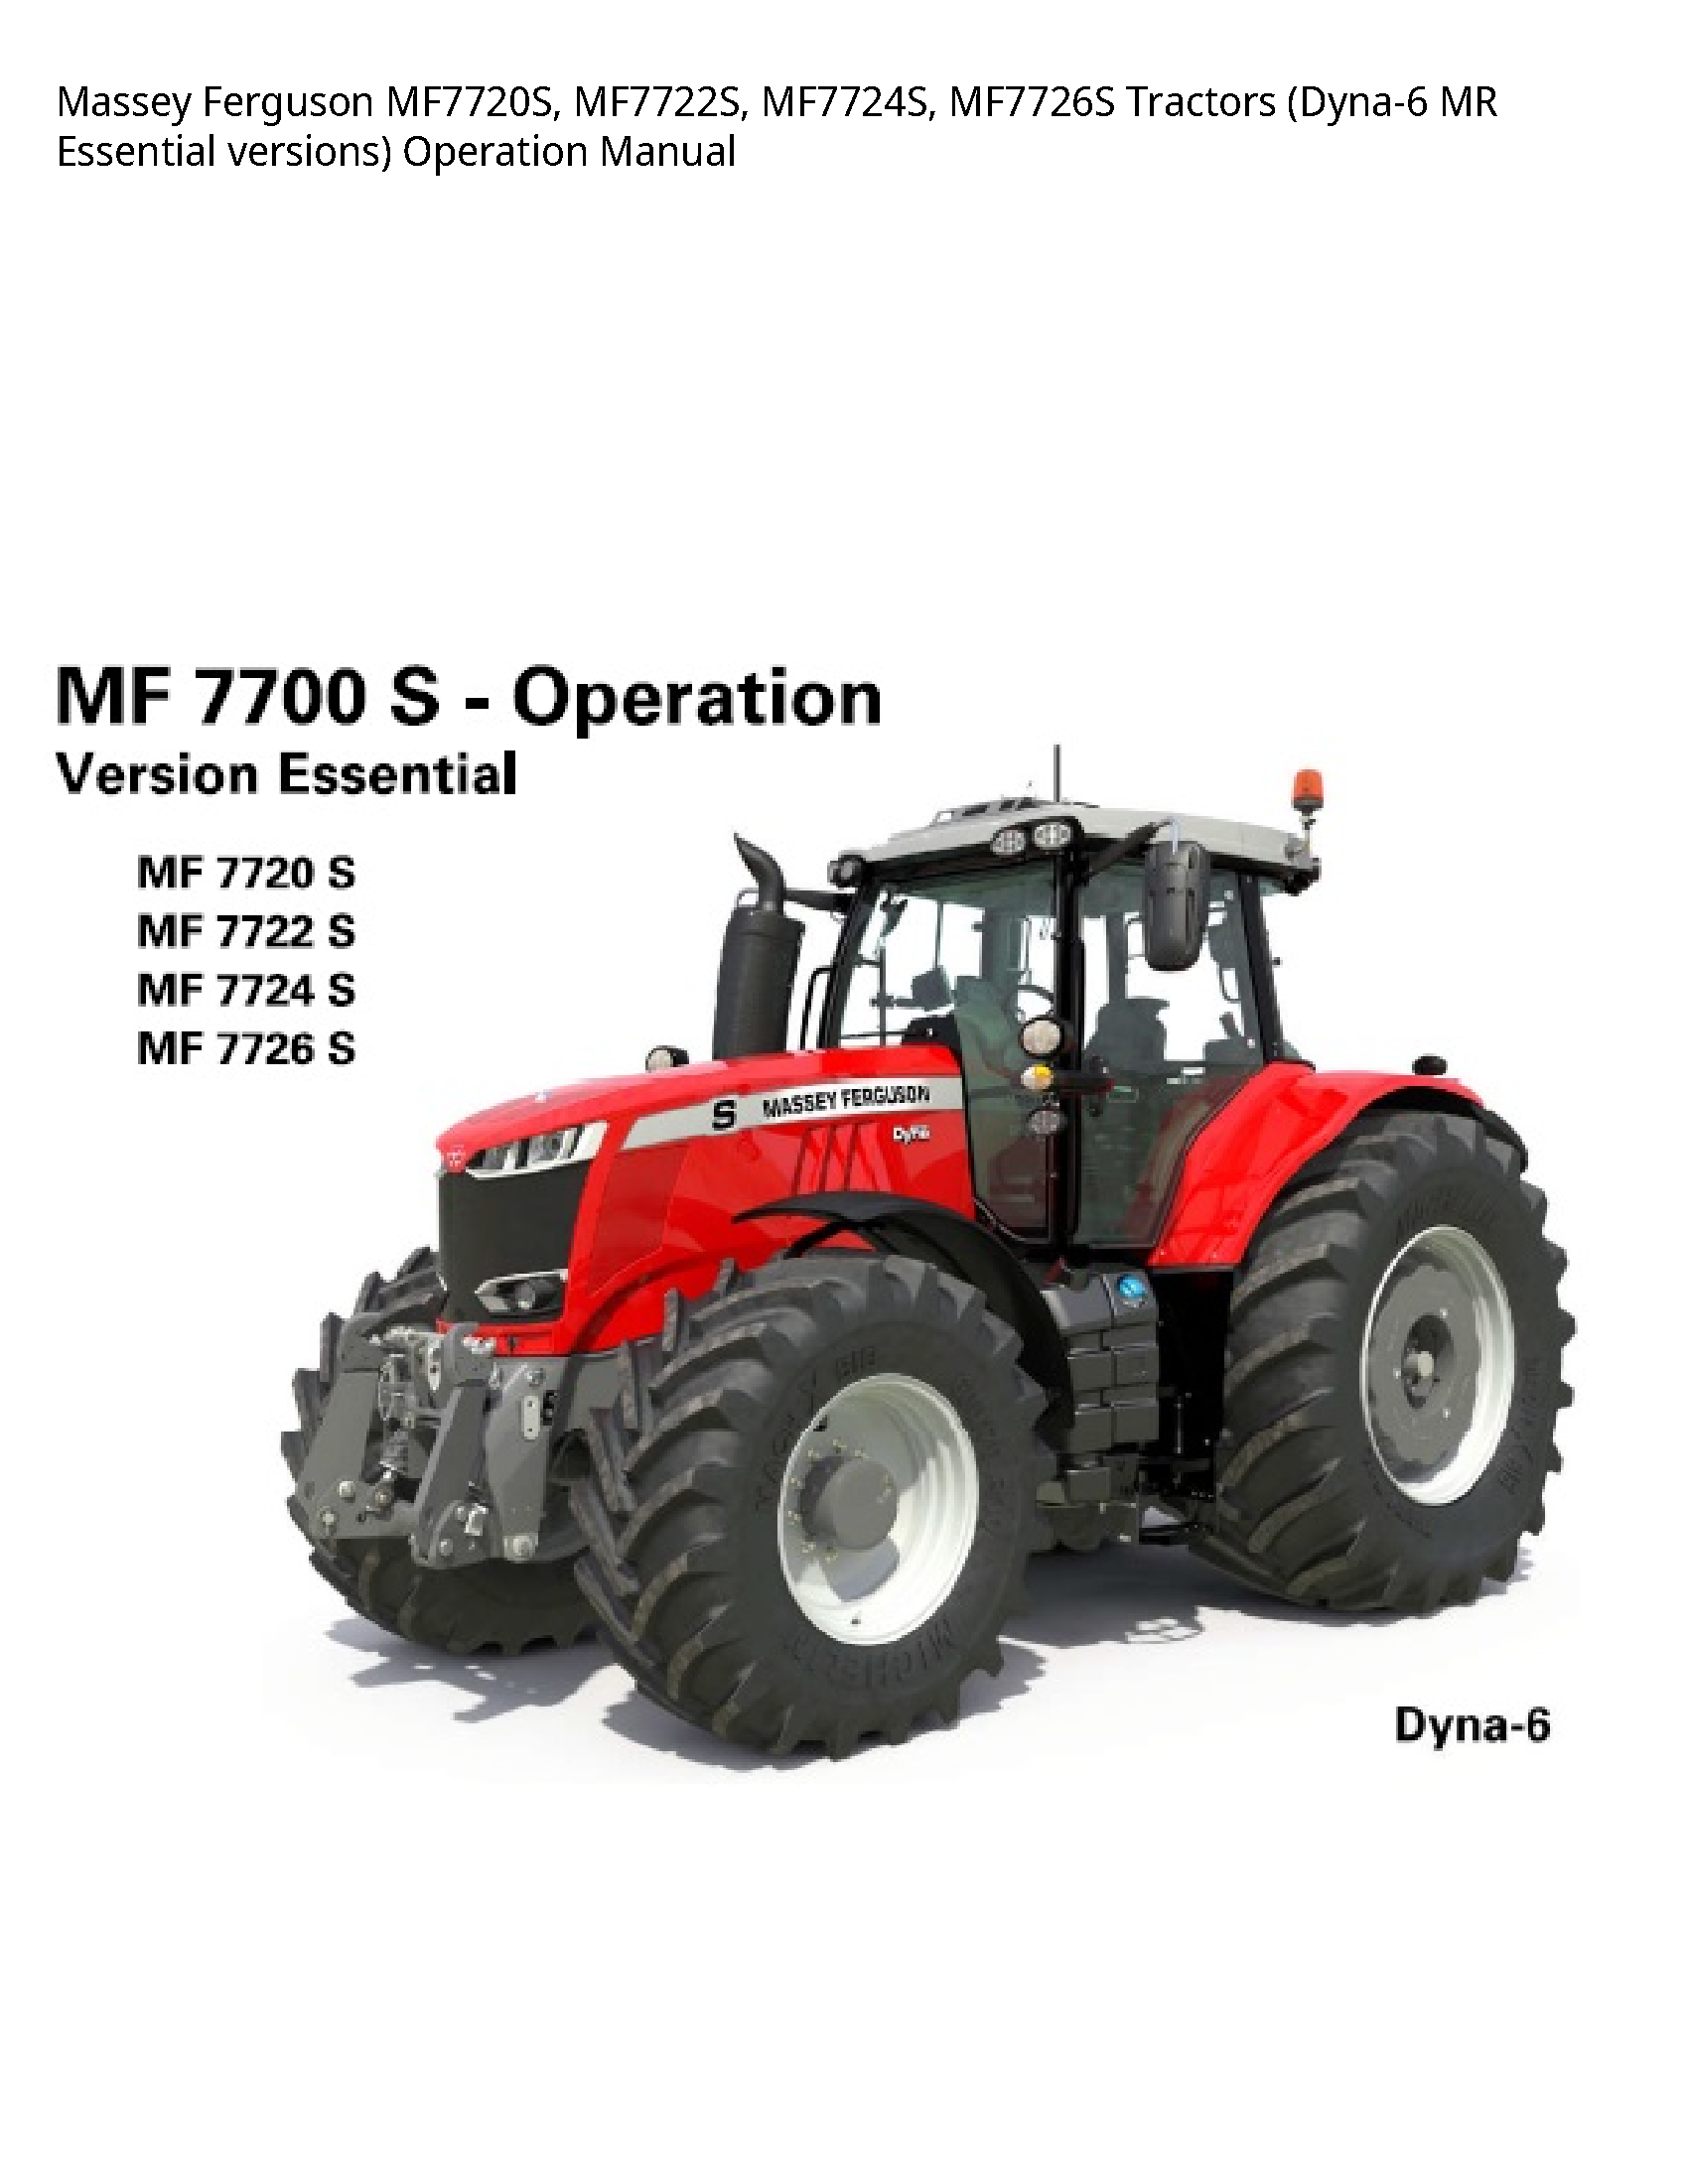 Massey Ferguson MF7720S Tractors MR Essential versions) Operation manual